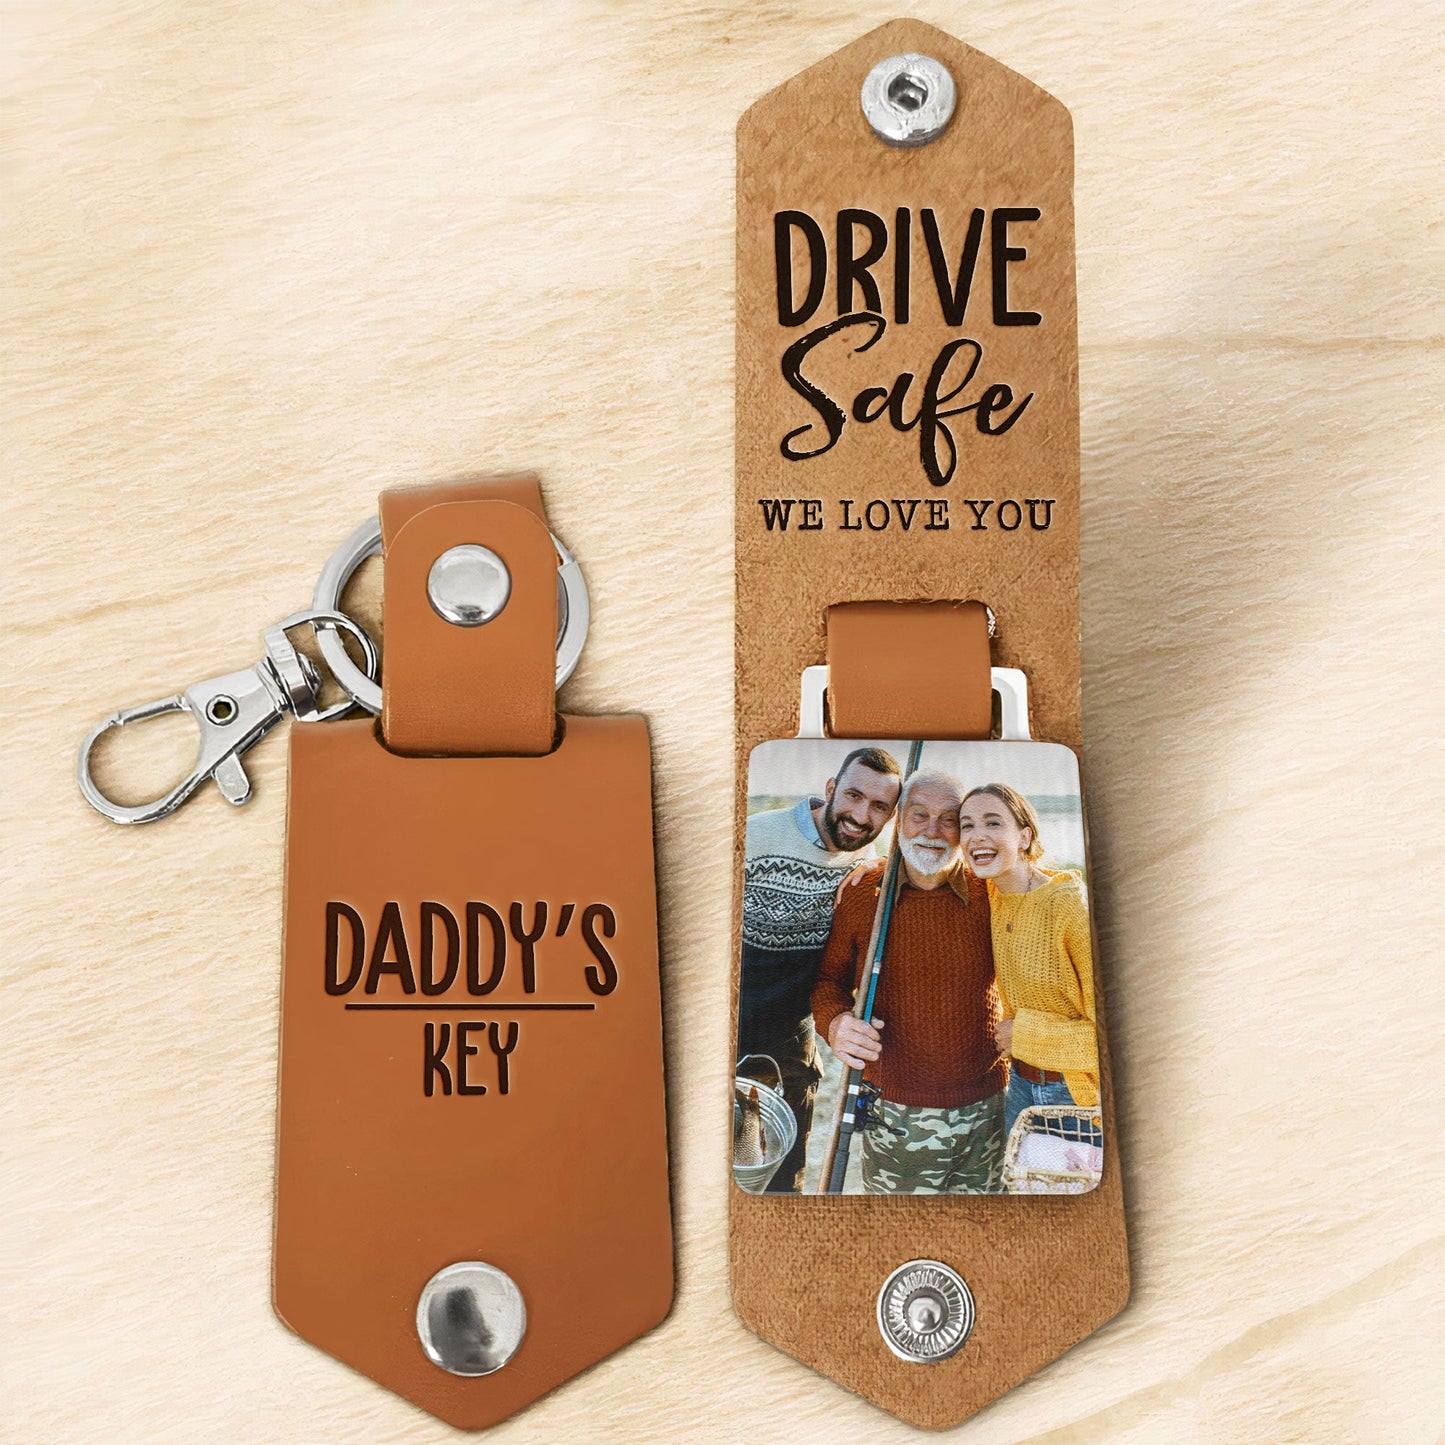 Daddy's Keys Drive Safe I Love You - Personalized Leather Photo Keychain